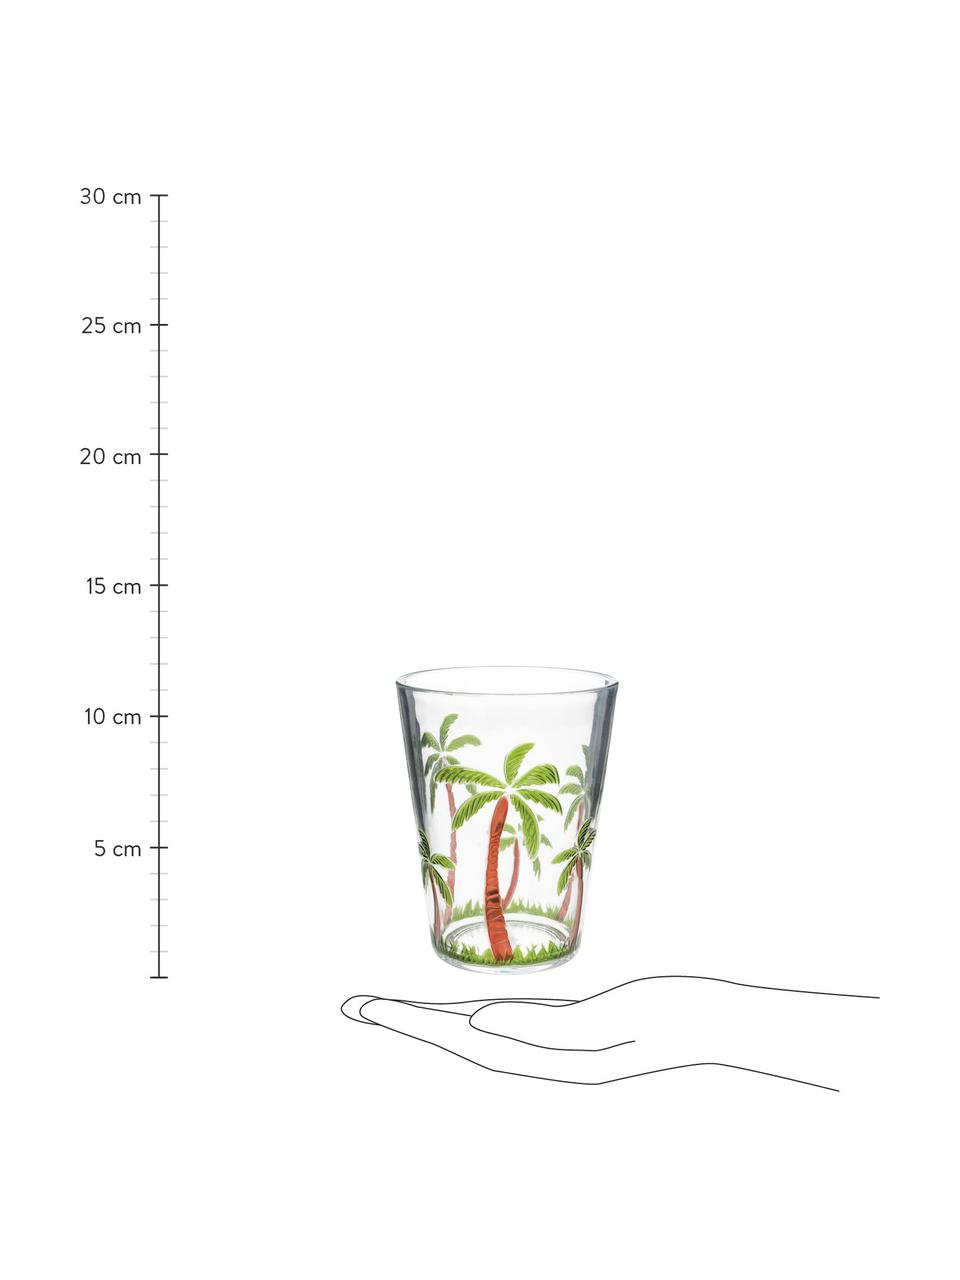 Acryl waterglas Gabrielle met palmbomen, Acryl, Transparant, groen, bruin, Ø 9 x H 12 cm